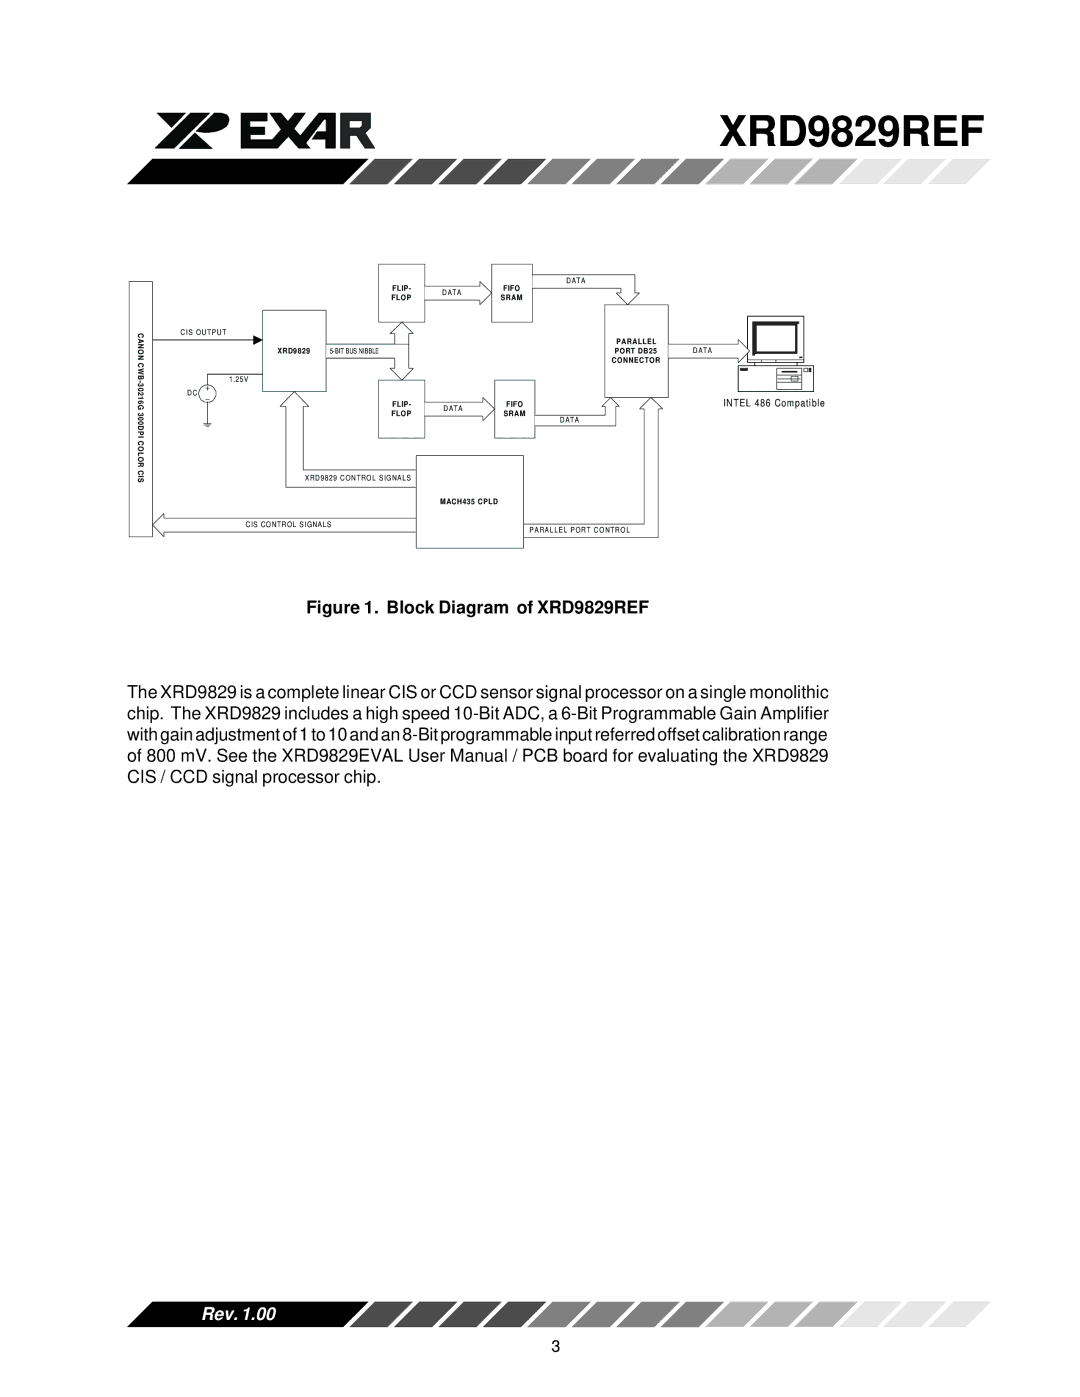 Canon user manual Block Diagram of XRD9829REF 